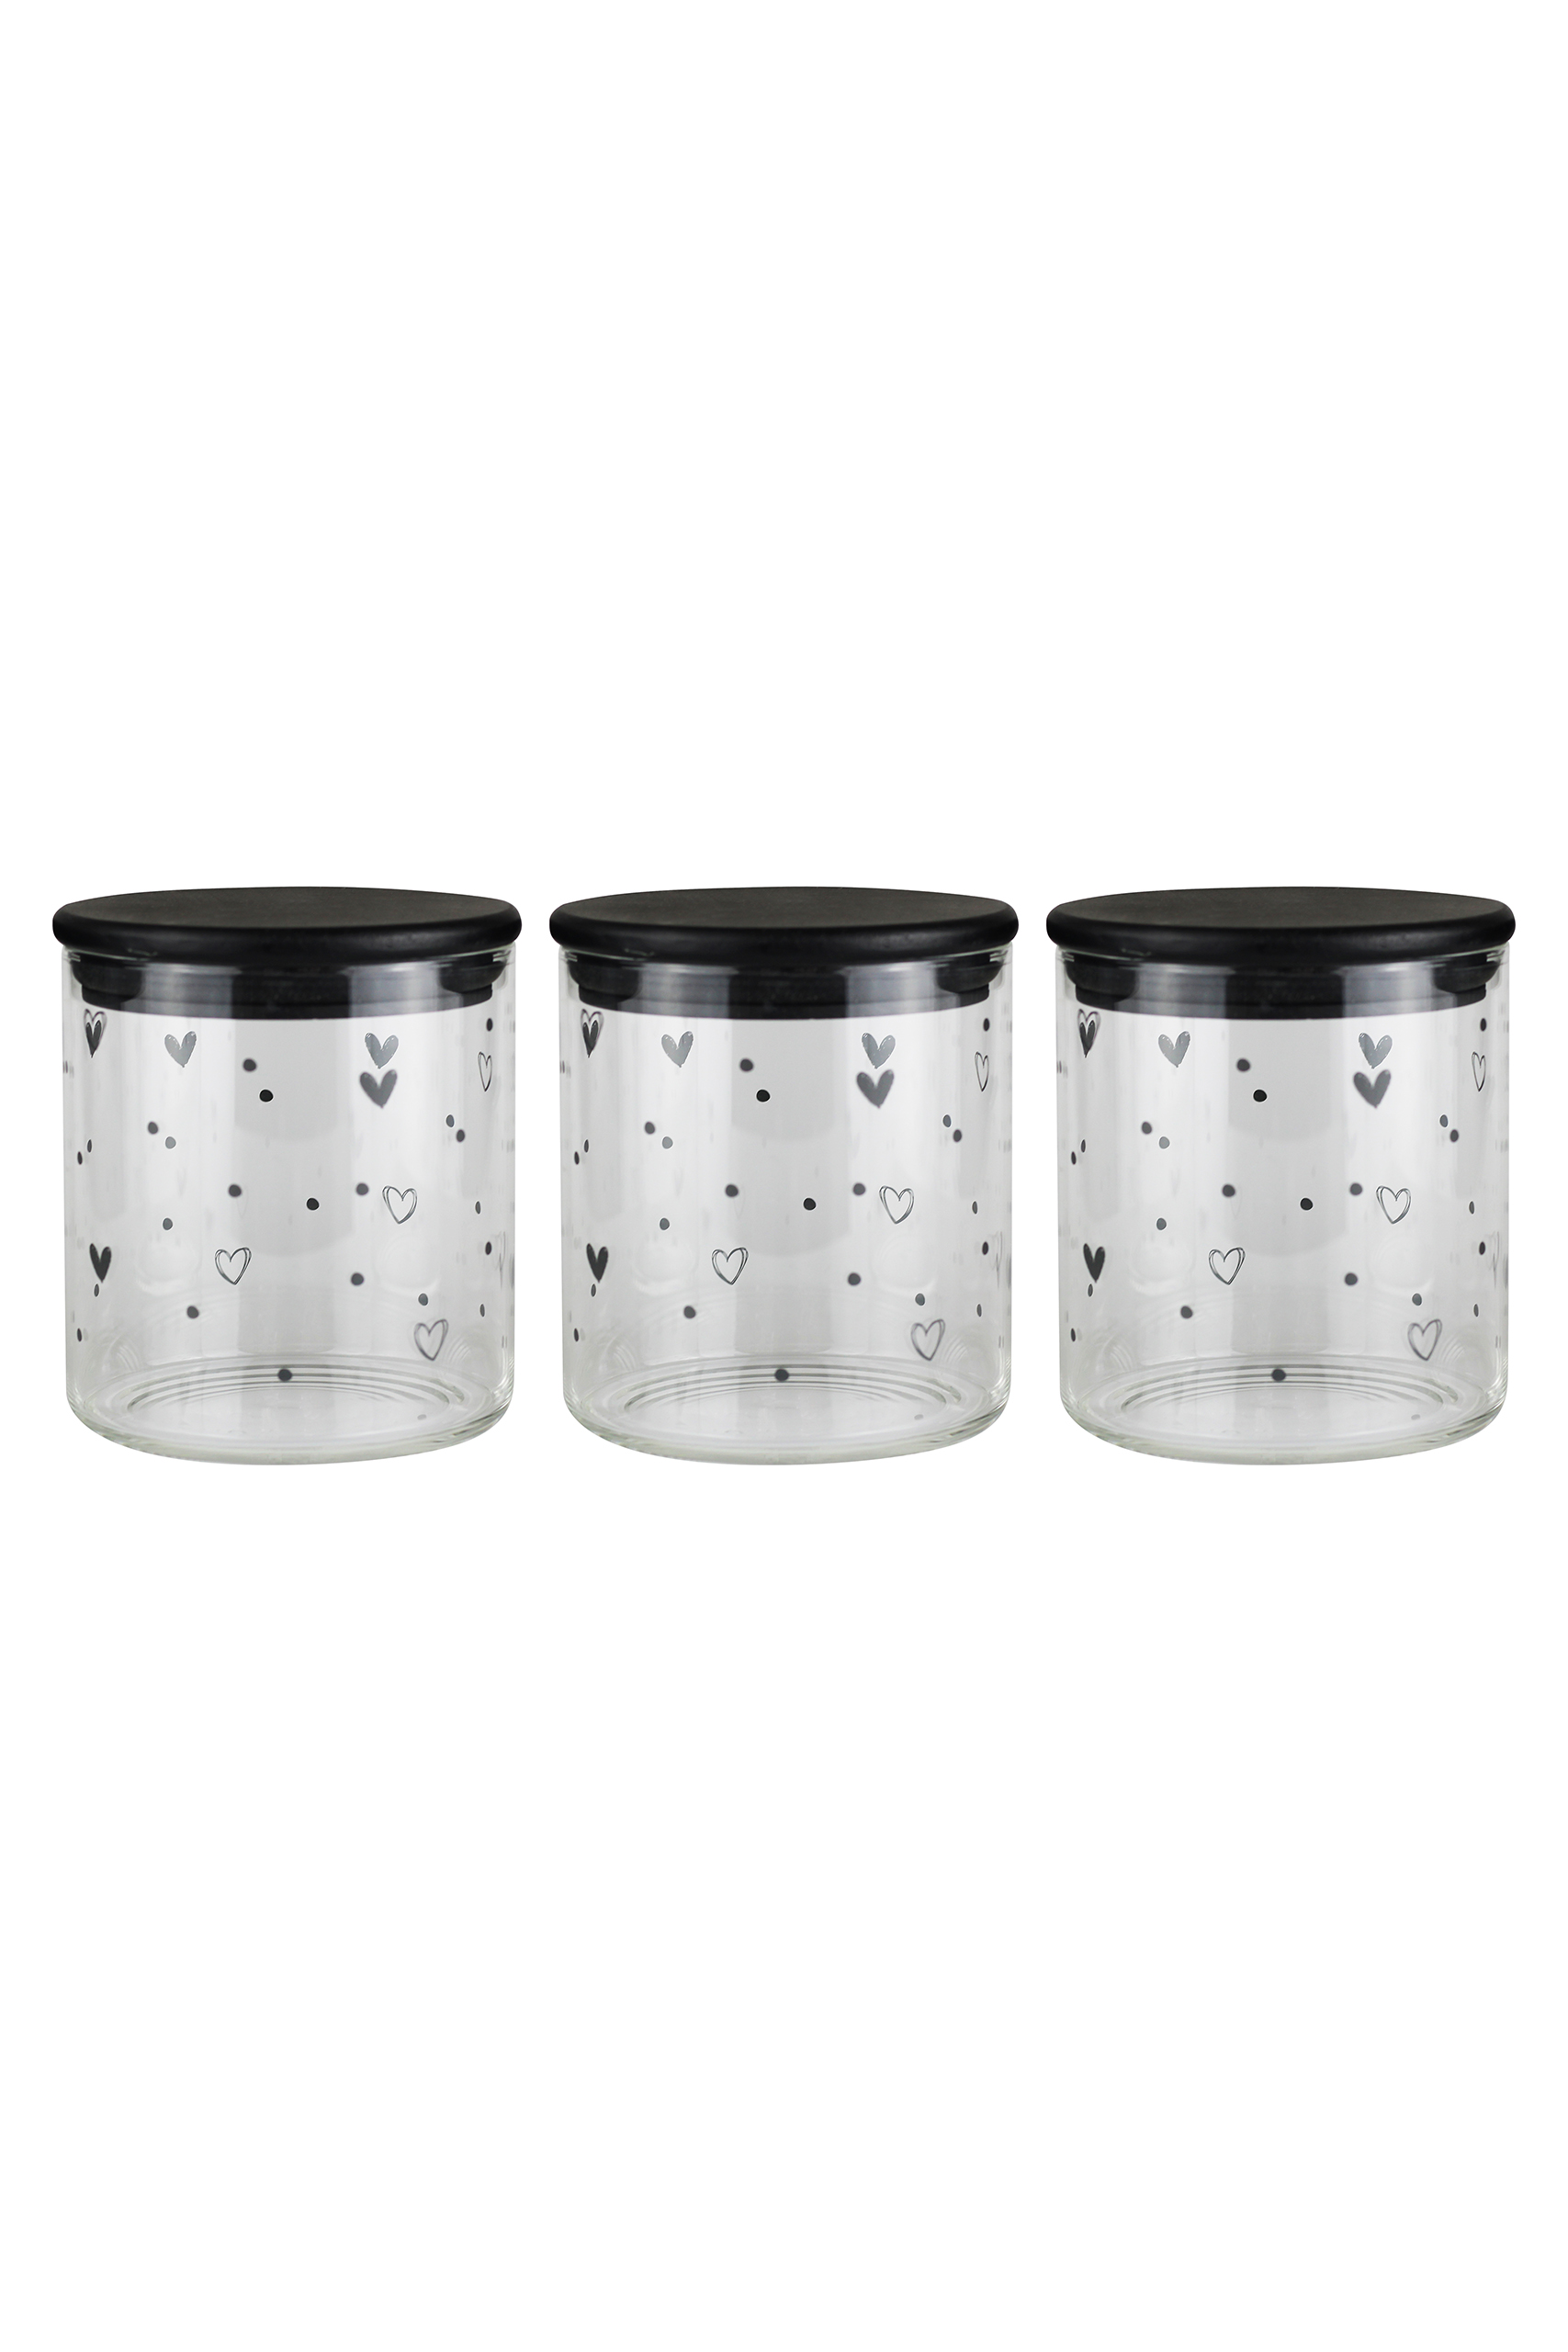 Set 3 Glass Black Hearts and Dots Bamboo Storage Jars - Black lid 600ml | Pretty Little Home